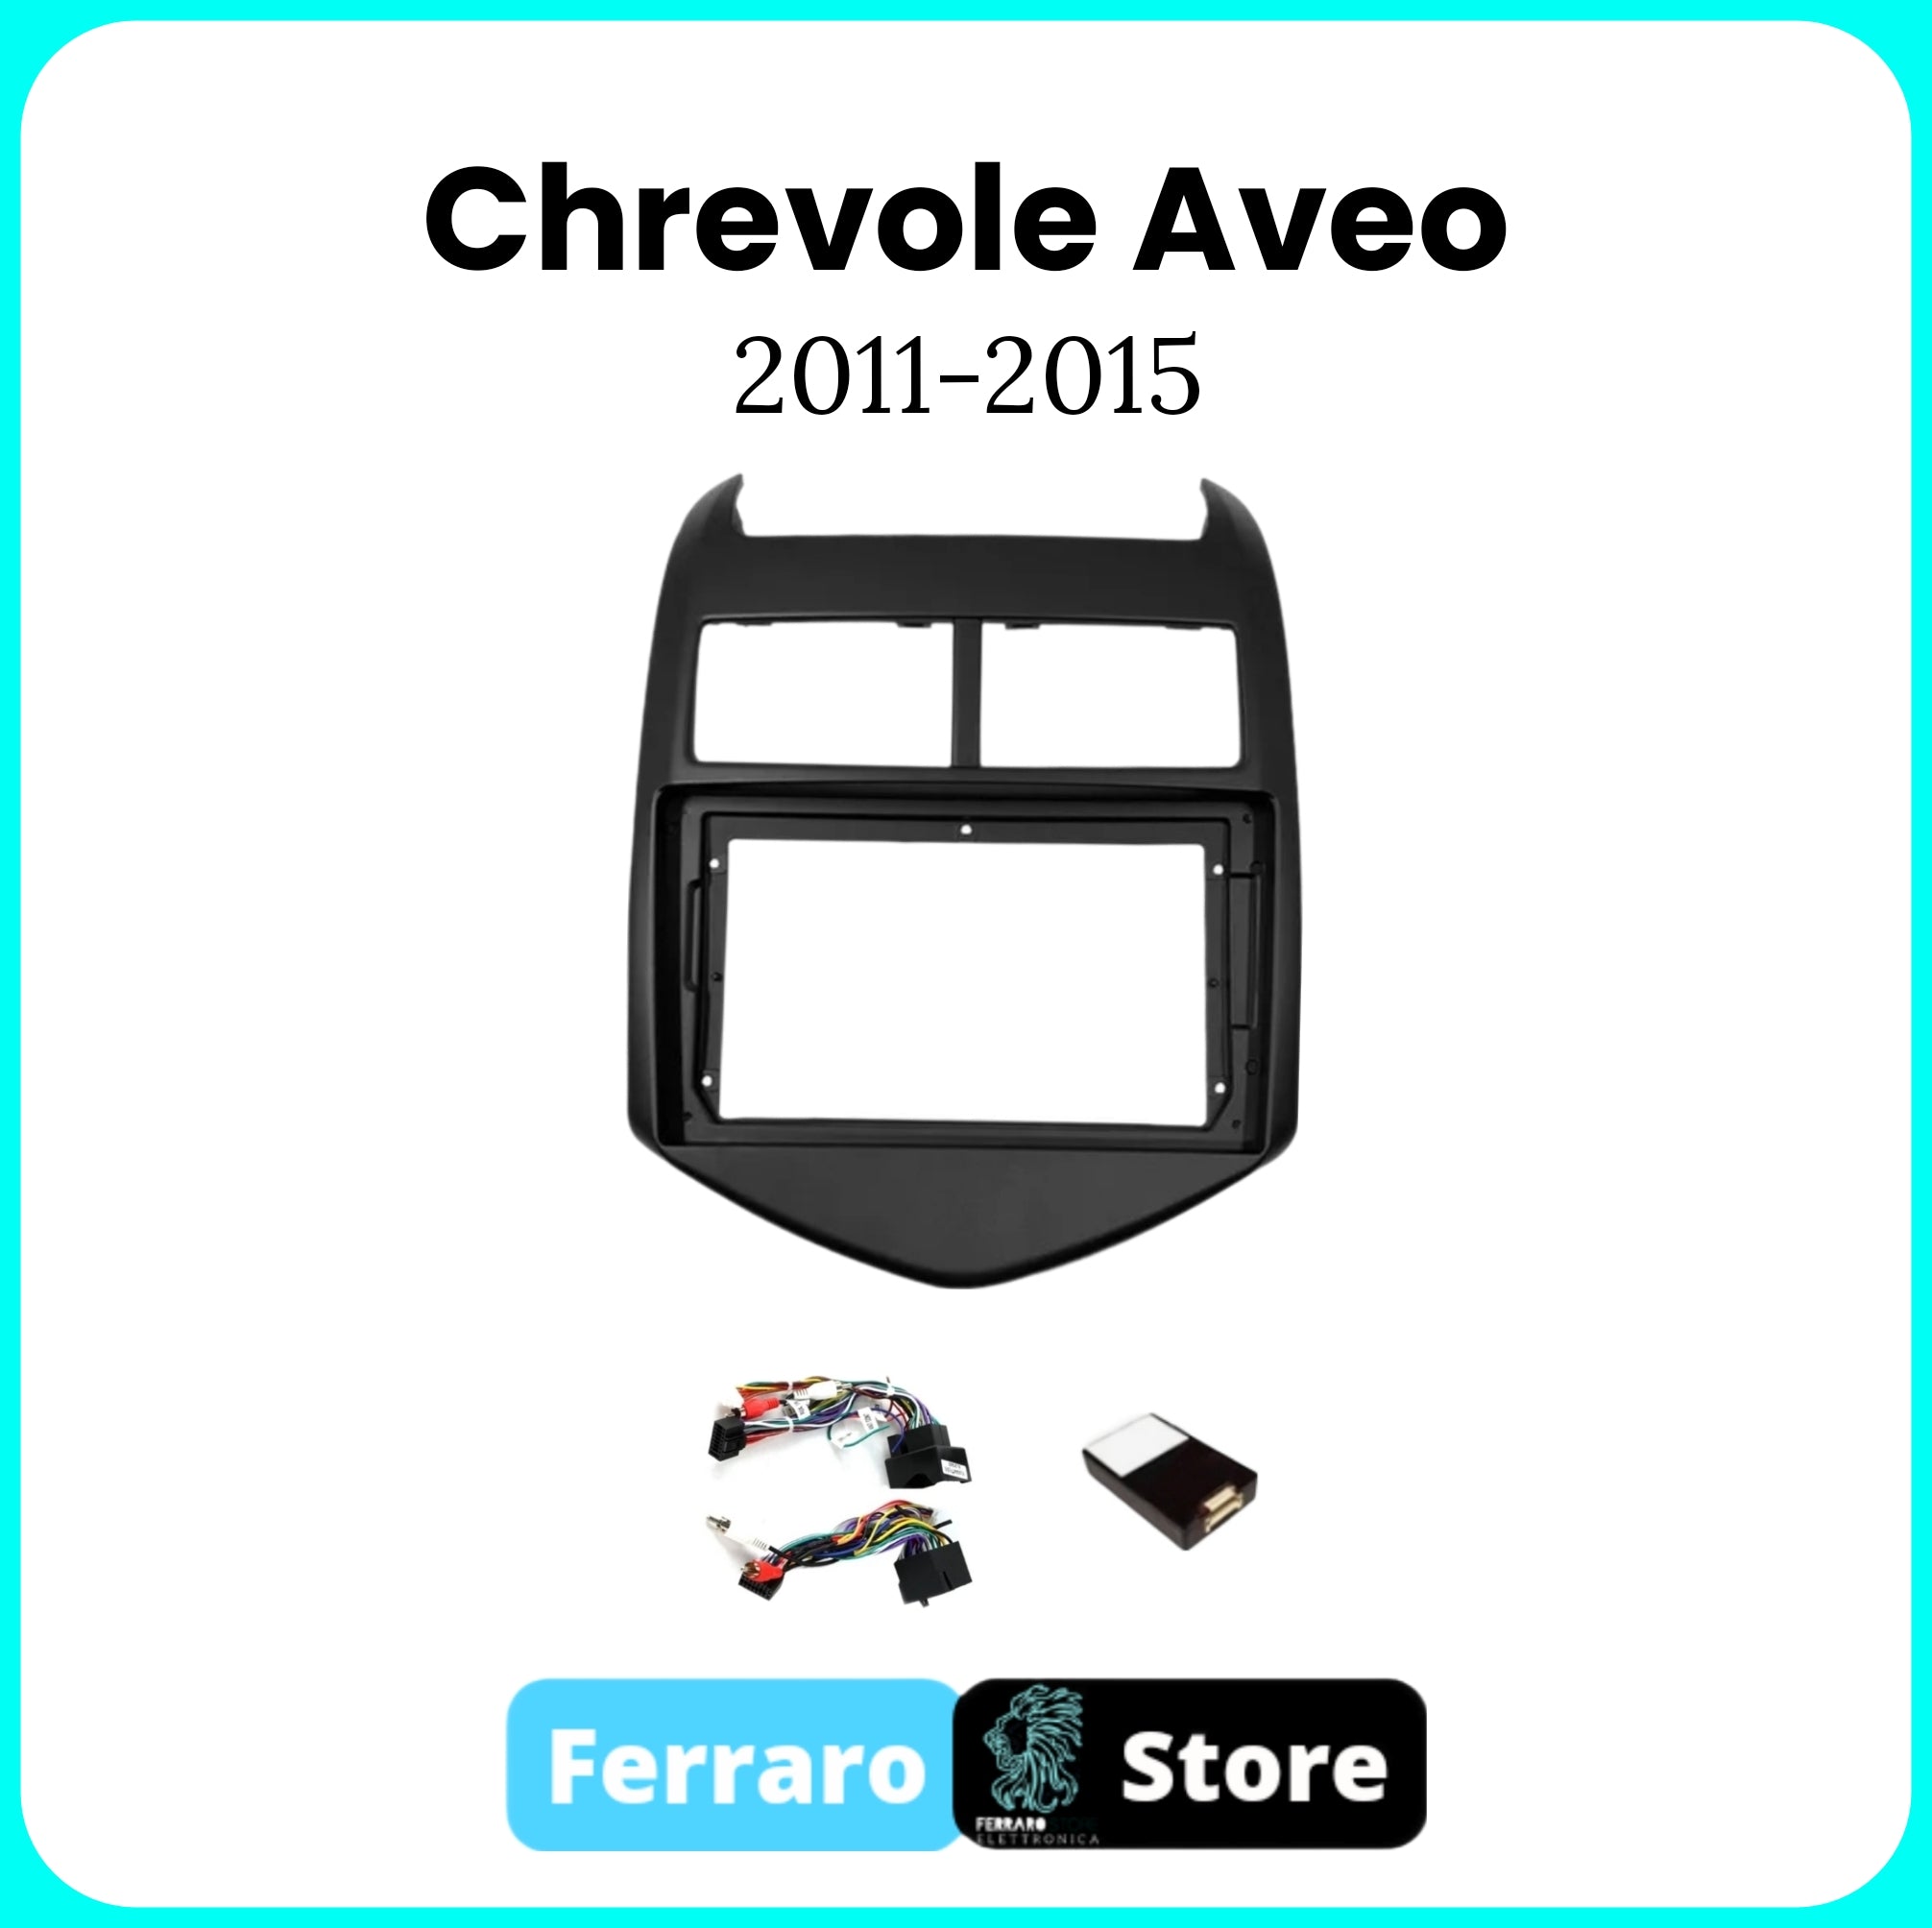 Kit Montaggio Autoradio 9"Pollici Chrevole Aveo [2011 - 2015] - Mascherina, Cablaggio Autoradio Android